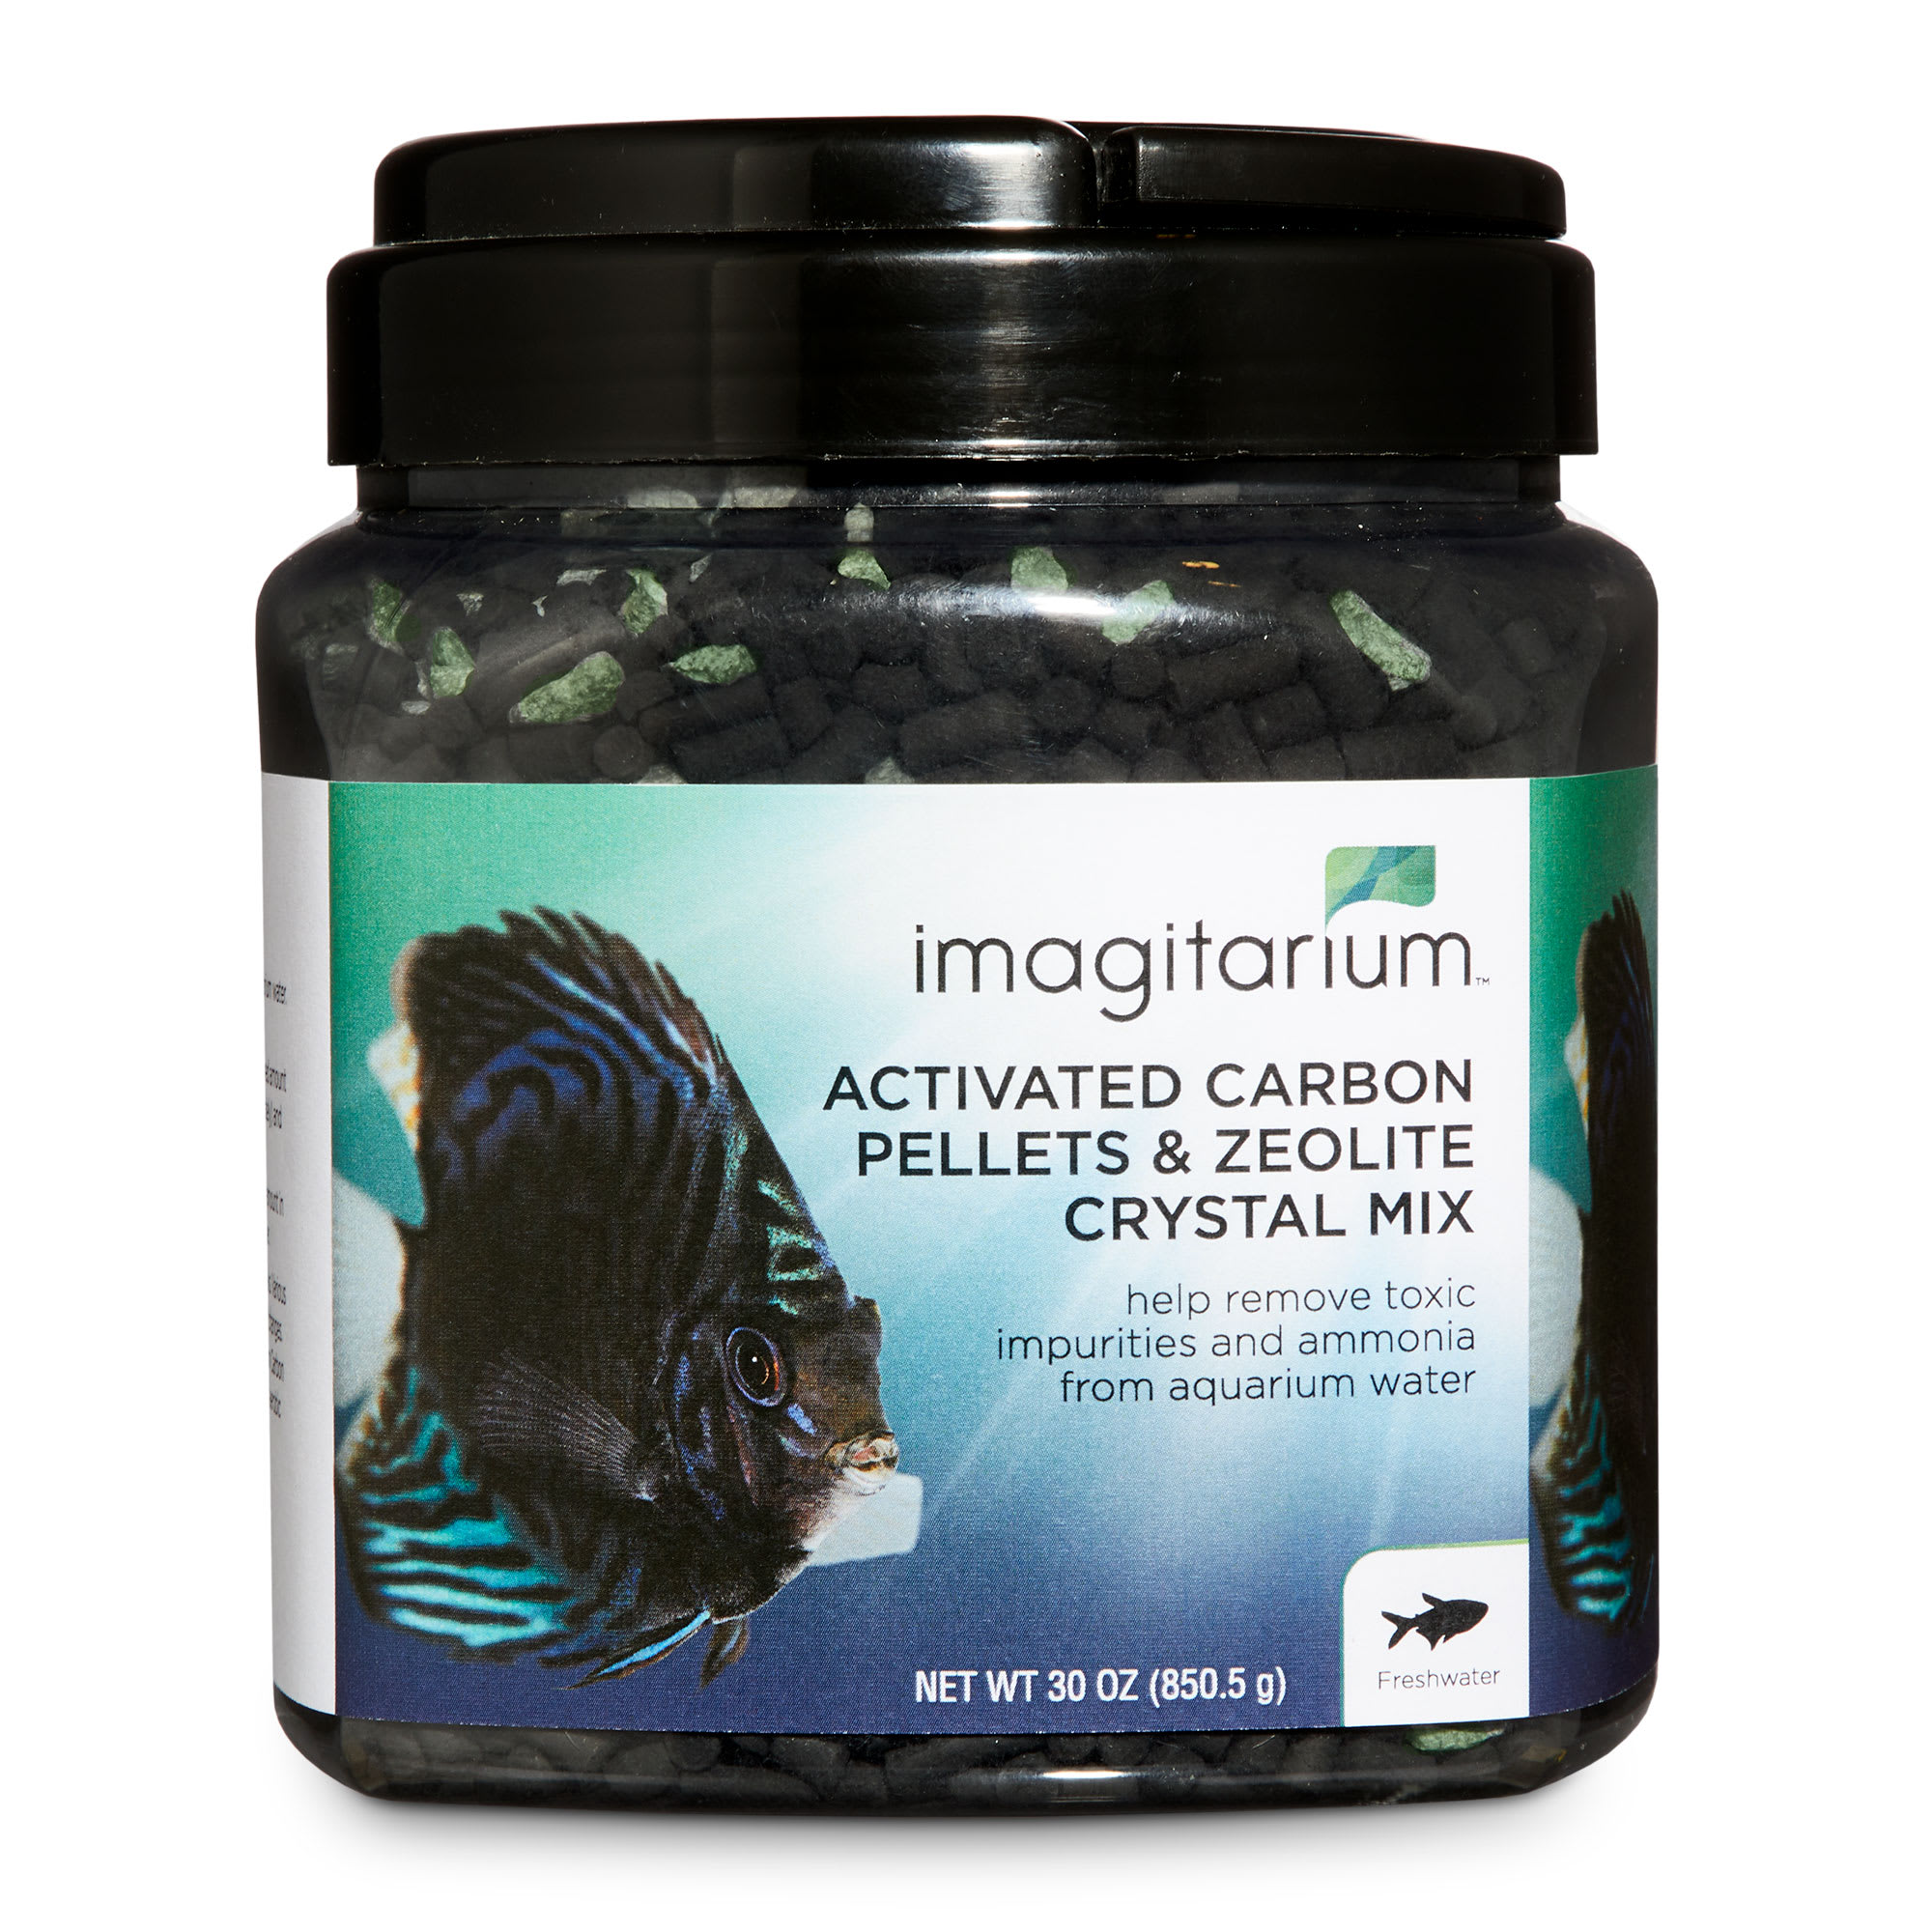 Imagitarium Activated Carbon Pellets & Zeolite Crystal Mix - 30 oz